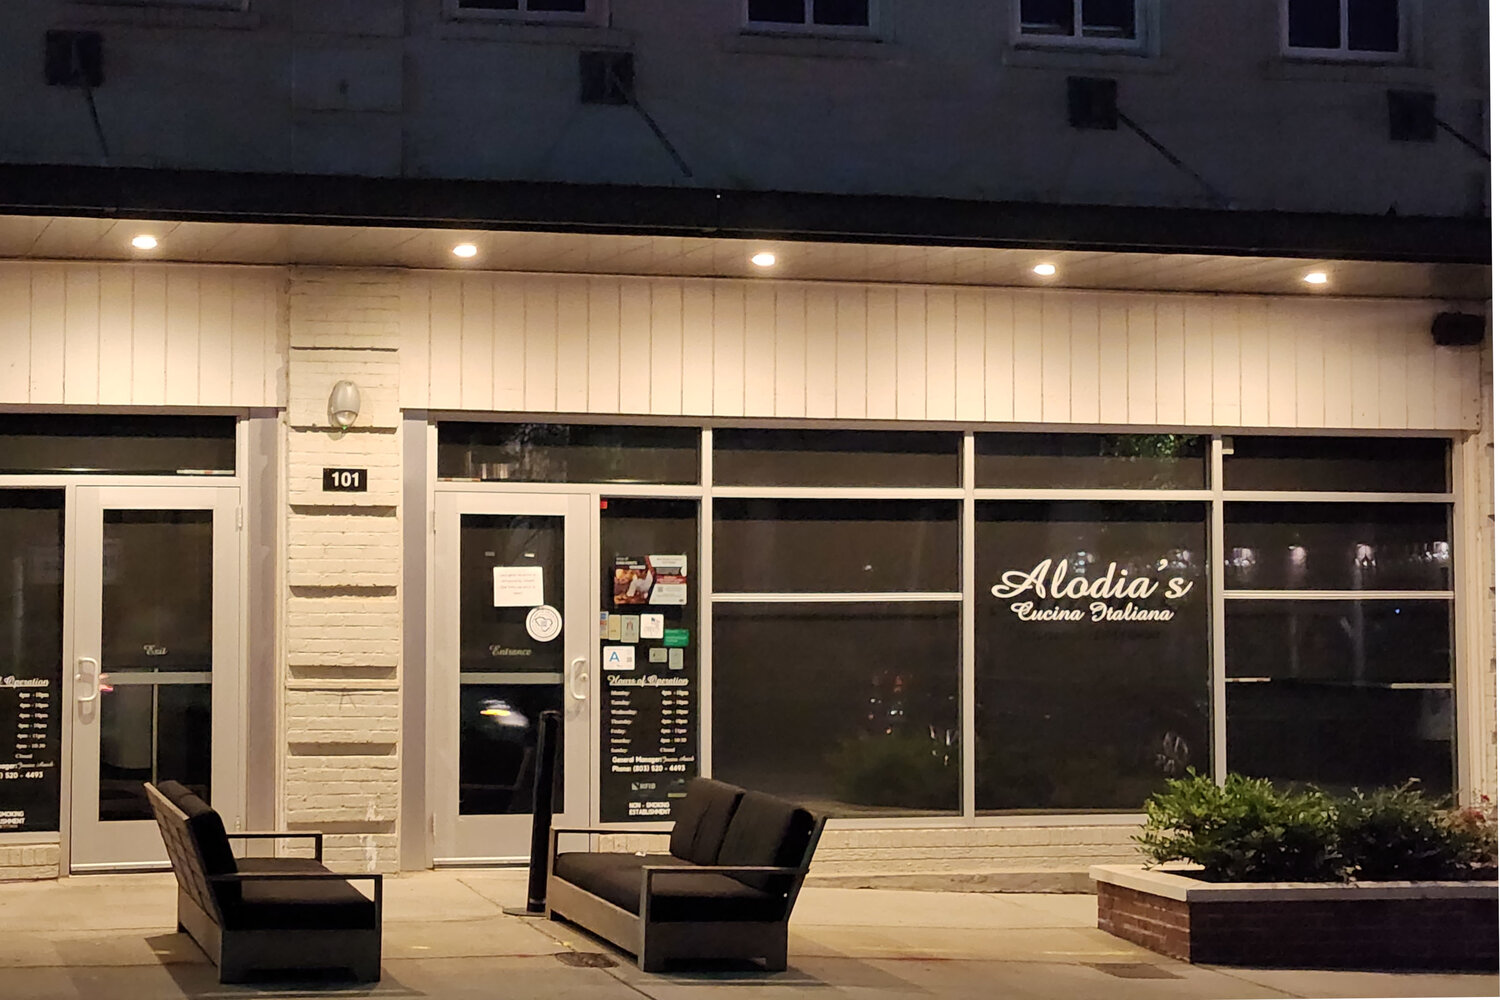 Alodia’s Cucina Italiana sits closed the evening of June 30.